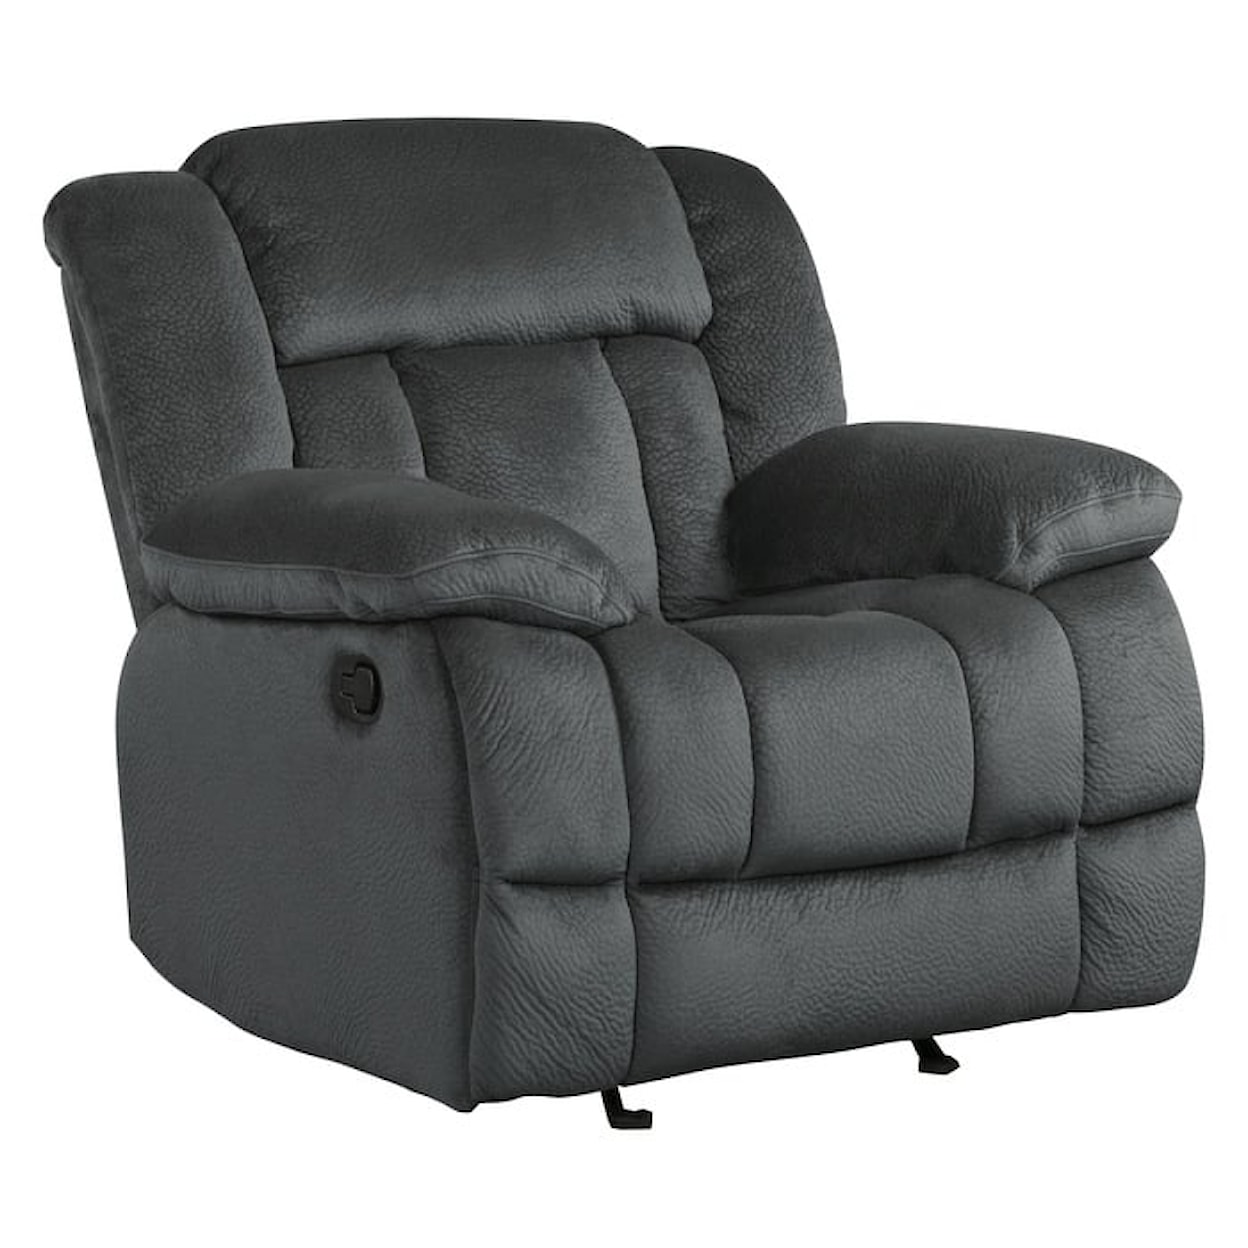 Homelegance Furniture Homelegance Glider Reclining Chair